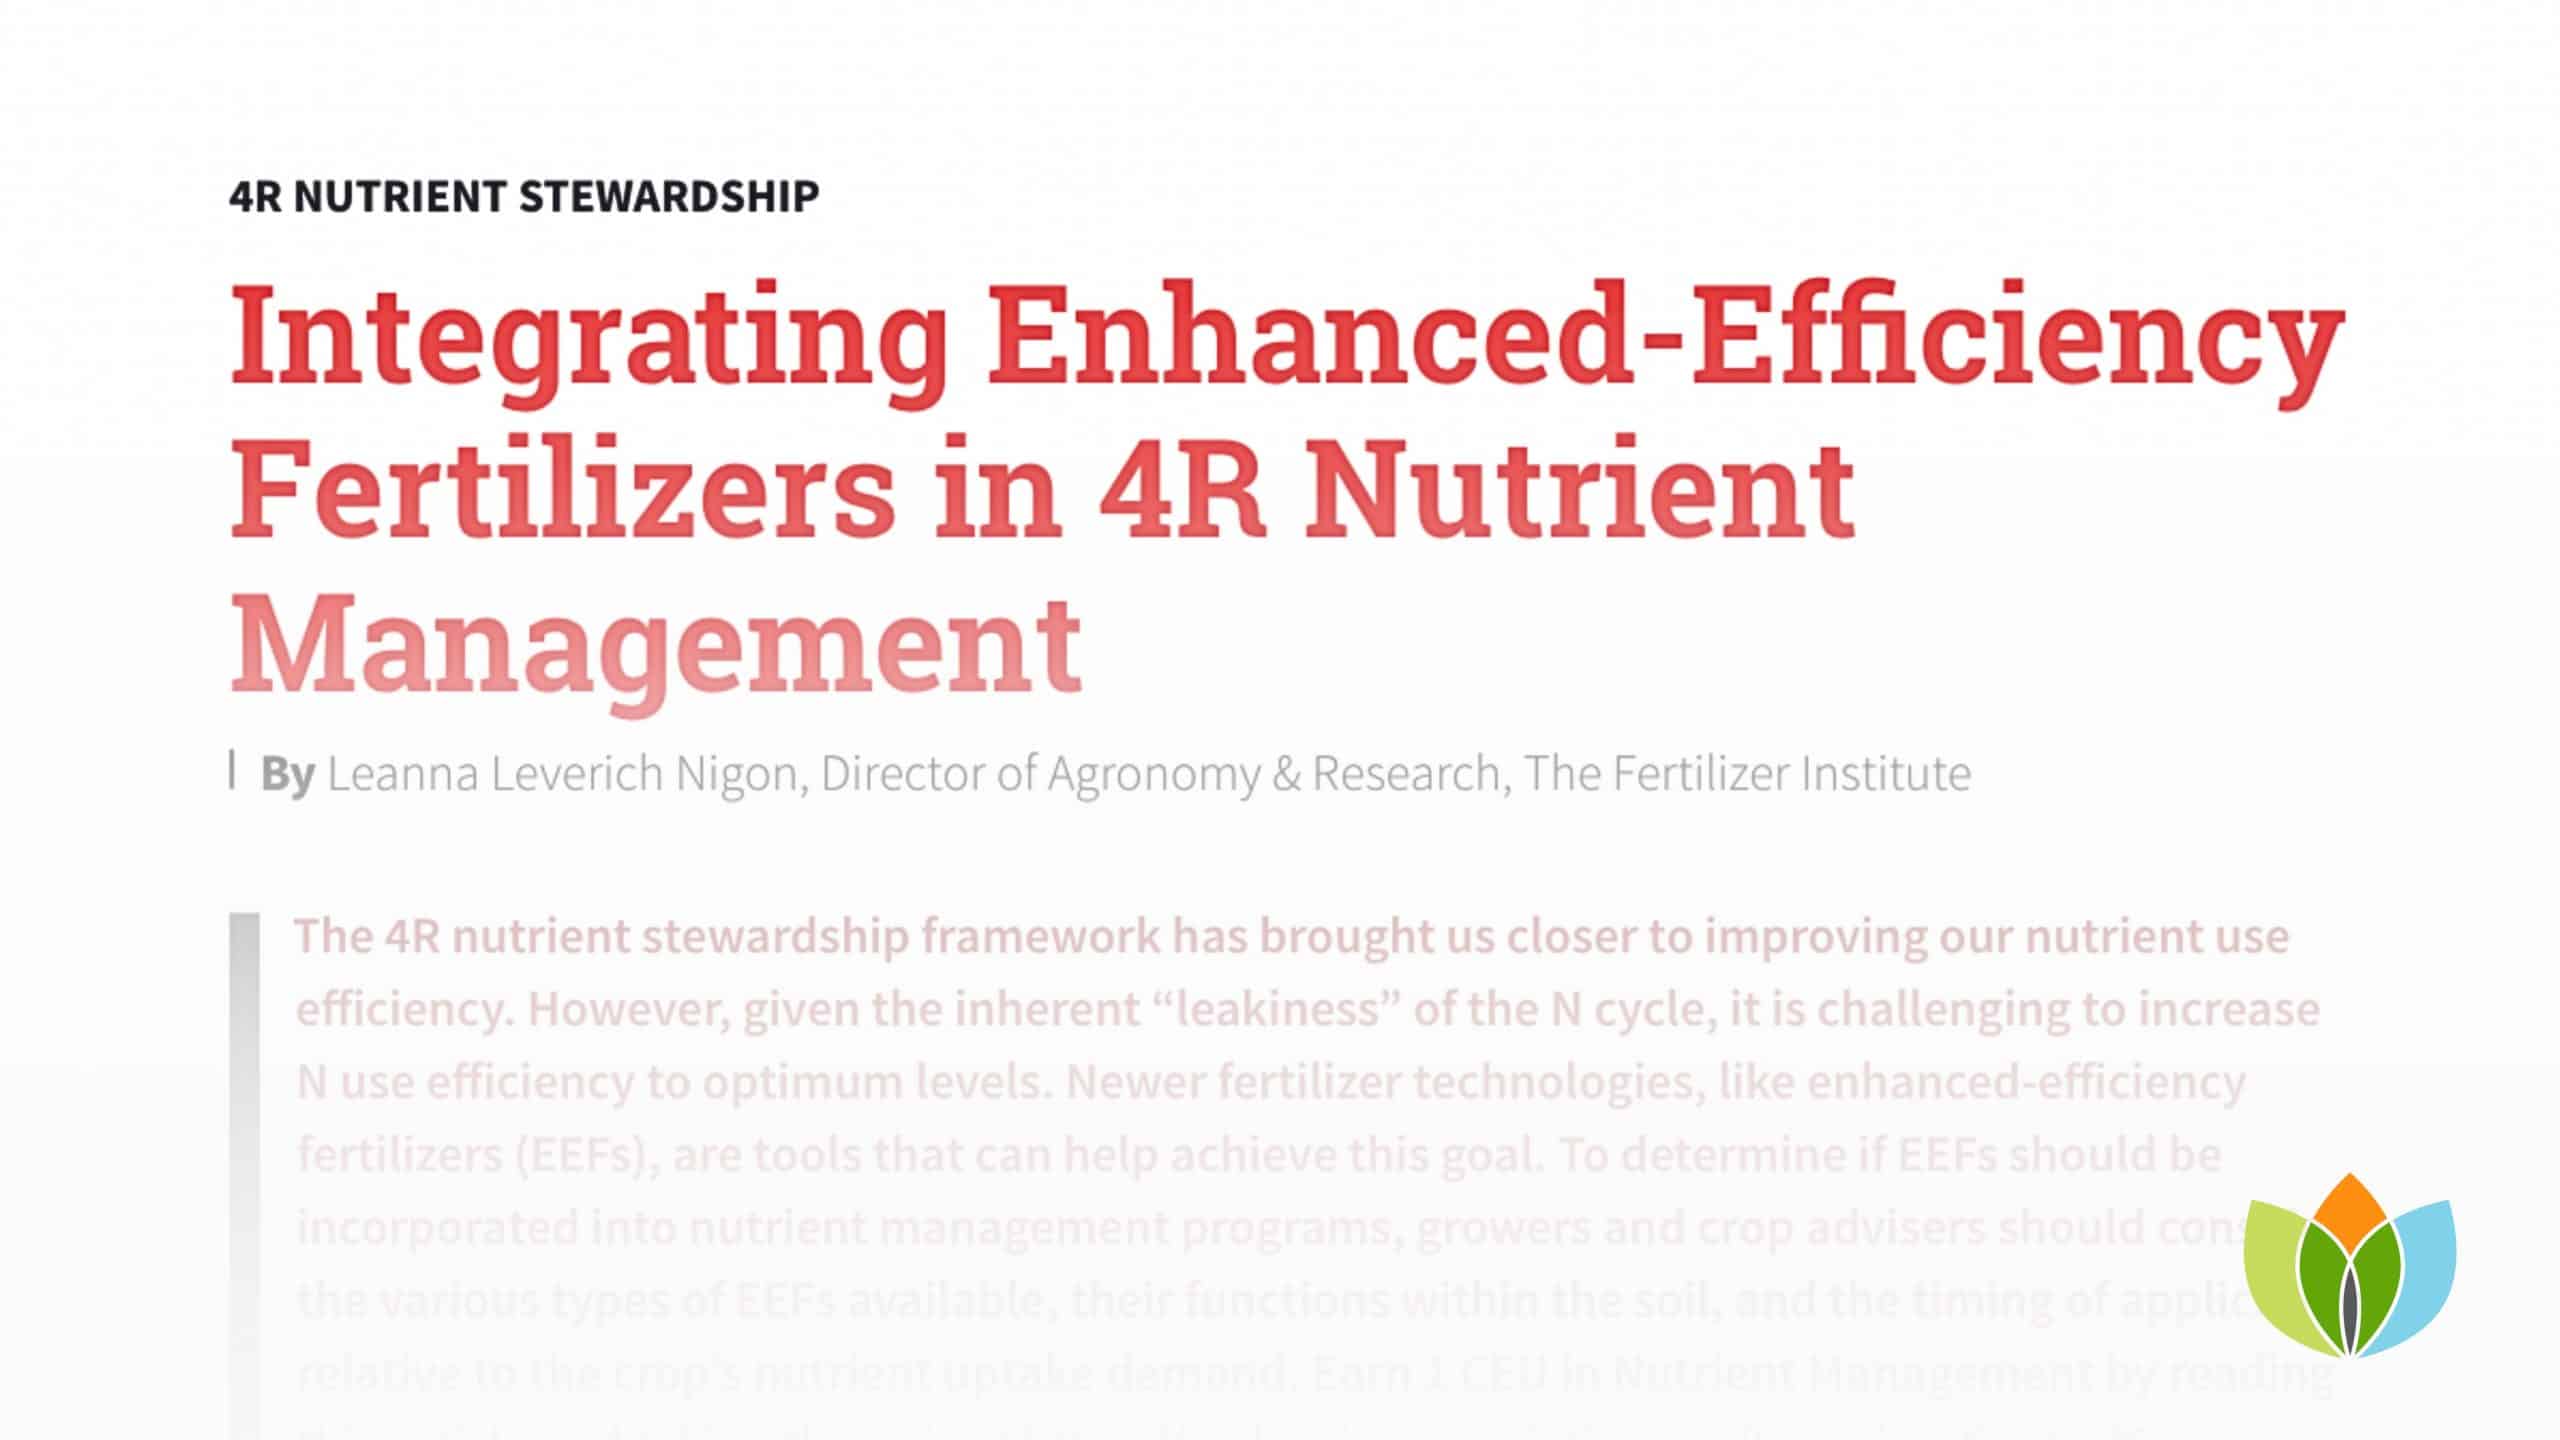 Integrating Enhanced-Efficiency Fertilizers in 4R Nutrient Fertilizers in 4R Nutrient Management